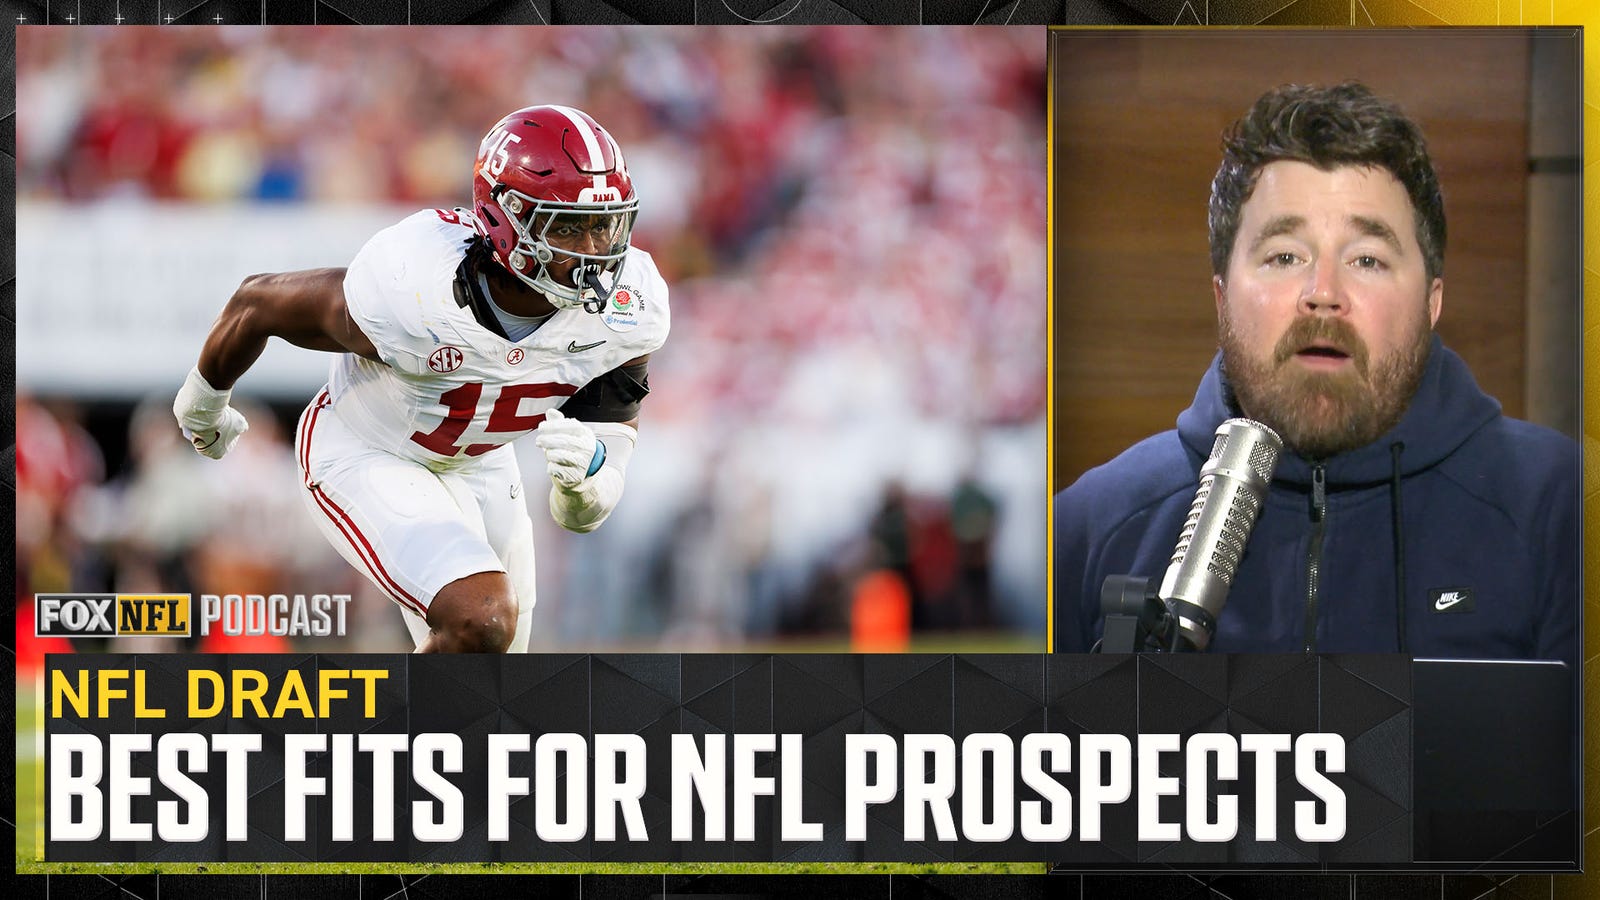 Best fits for NFL draft prospects featuring Joe Alt & Dallas Turner